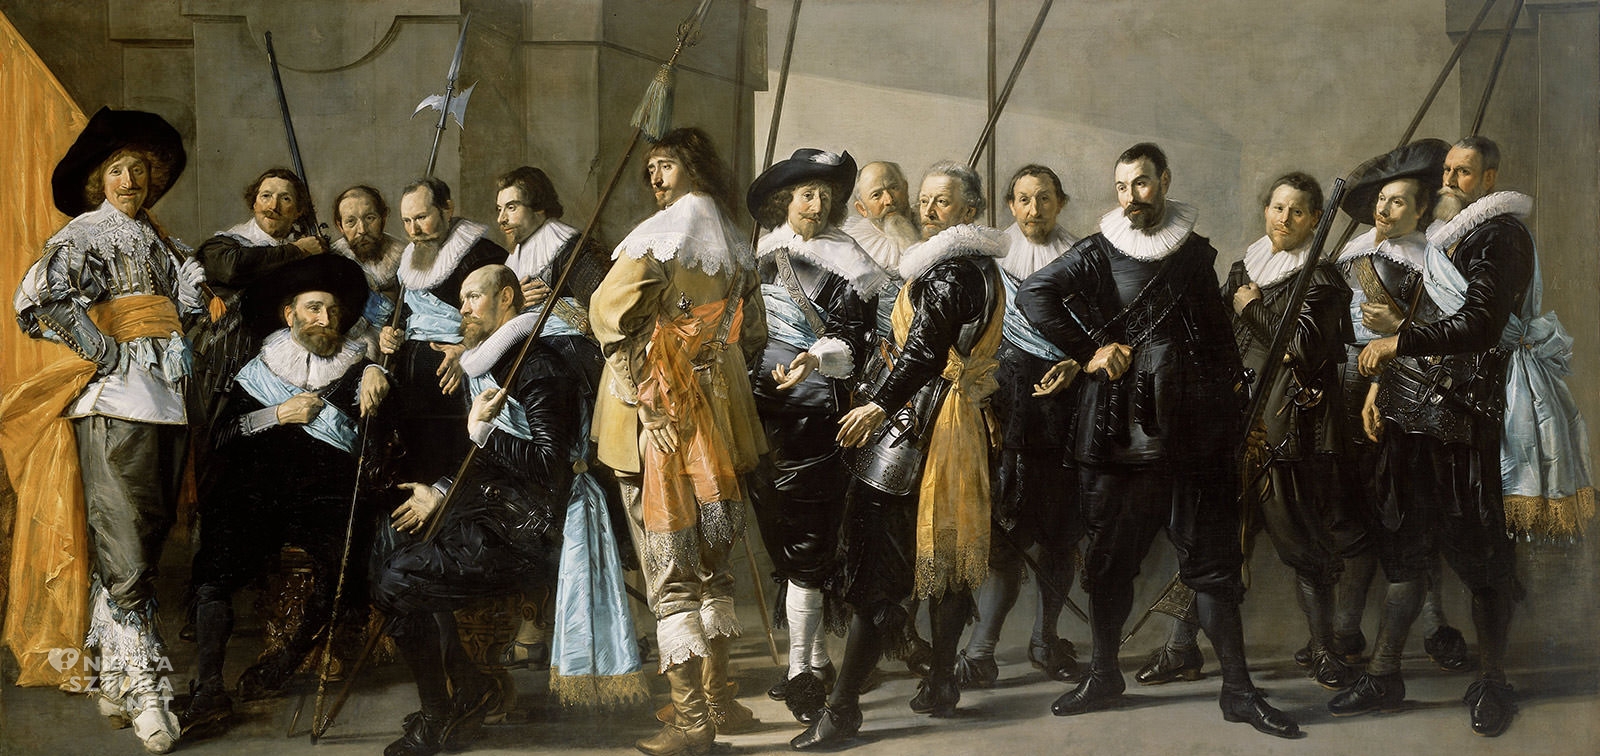 Frans Hals, Pieter Codde, Chuda kompania, malarstwo holenderskie, Niezła sztuka